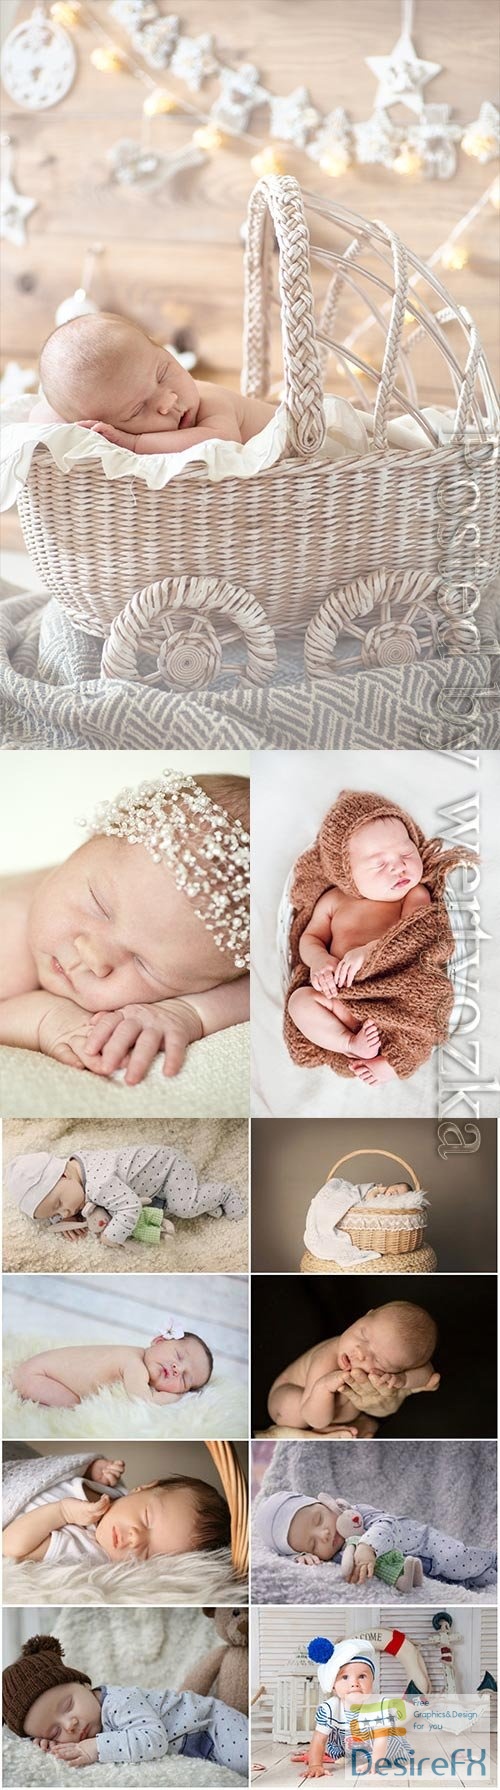 Adorable newborn babies stock photo